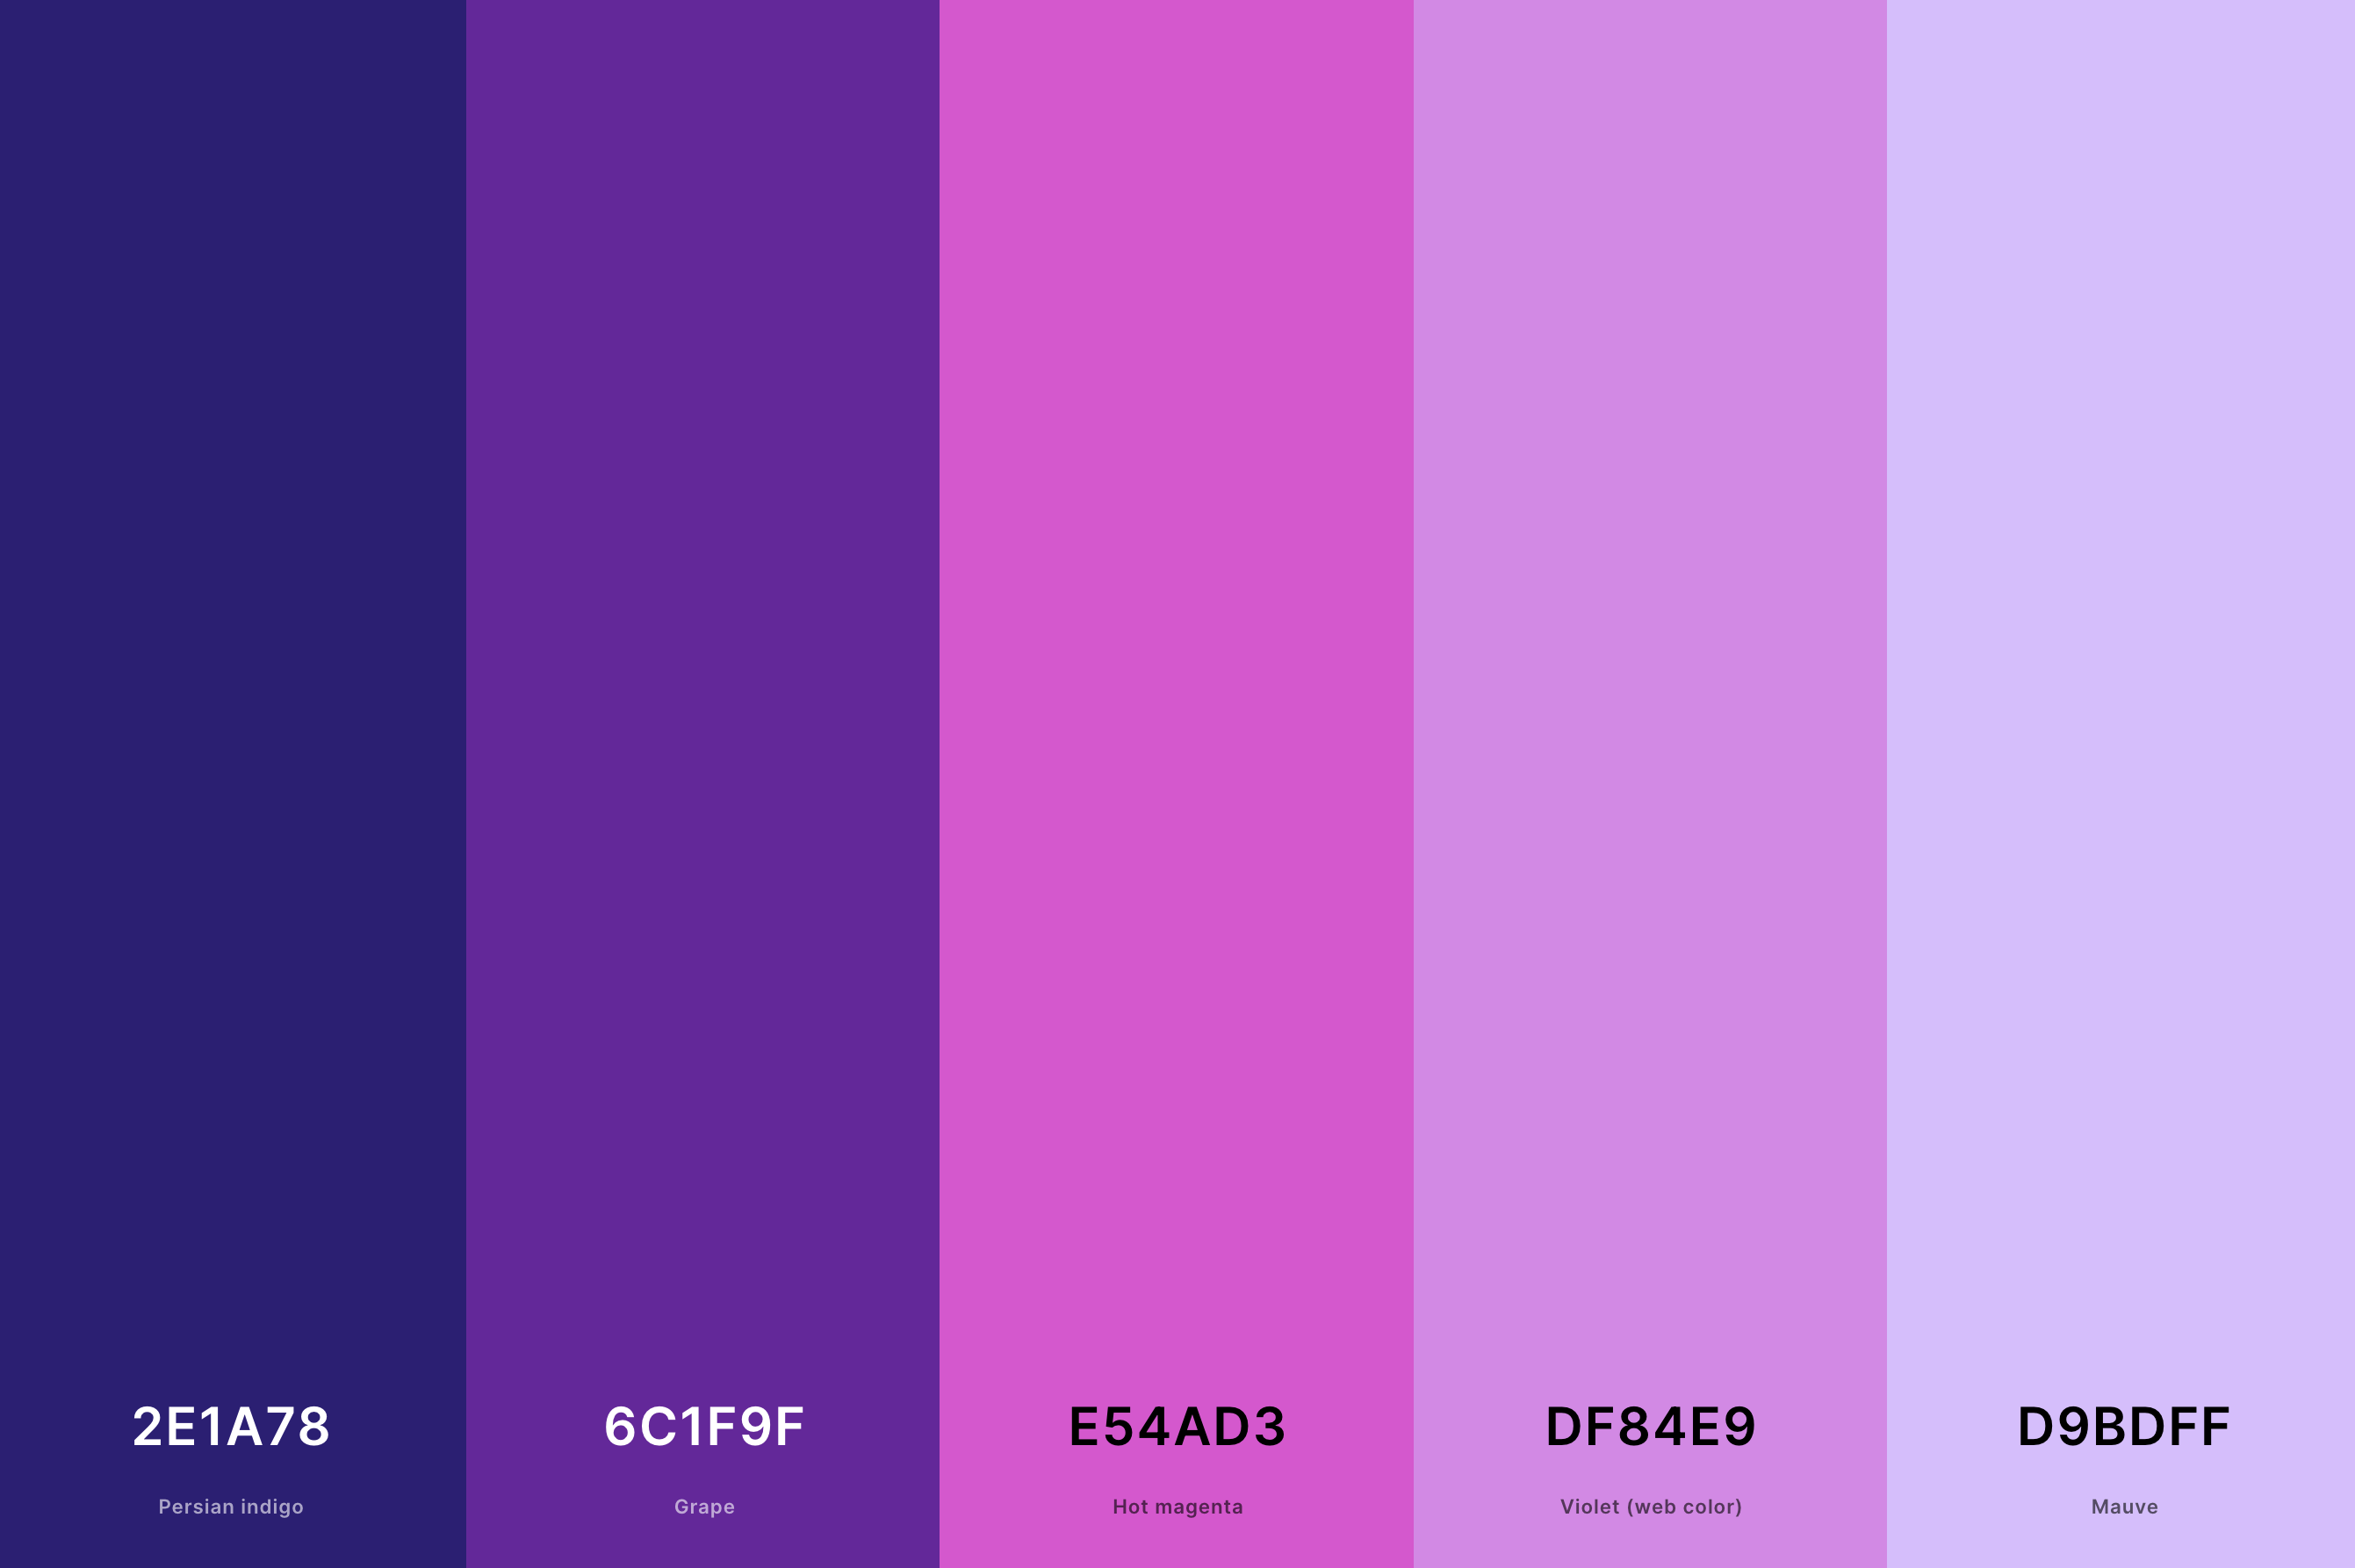 25. Aesthetic Galaxy Color Palette Color Palette with Persian Indigo (Hex #2E1A78) + Grape (Hex #6C1F9F) + Hot Magenta (Hex #E54AD3) + Violet (Web Color) (Hex #DF84E9) + Mauve (Hex #D9BDFF) Color Palette with Hex Codes